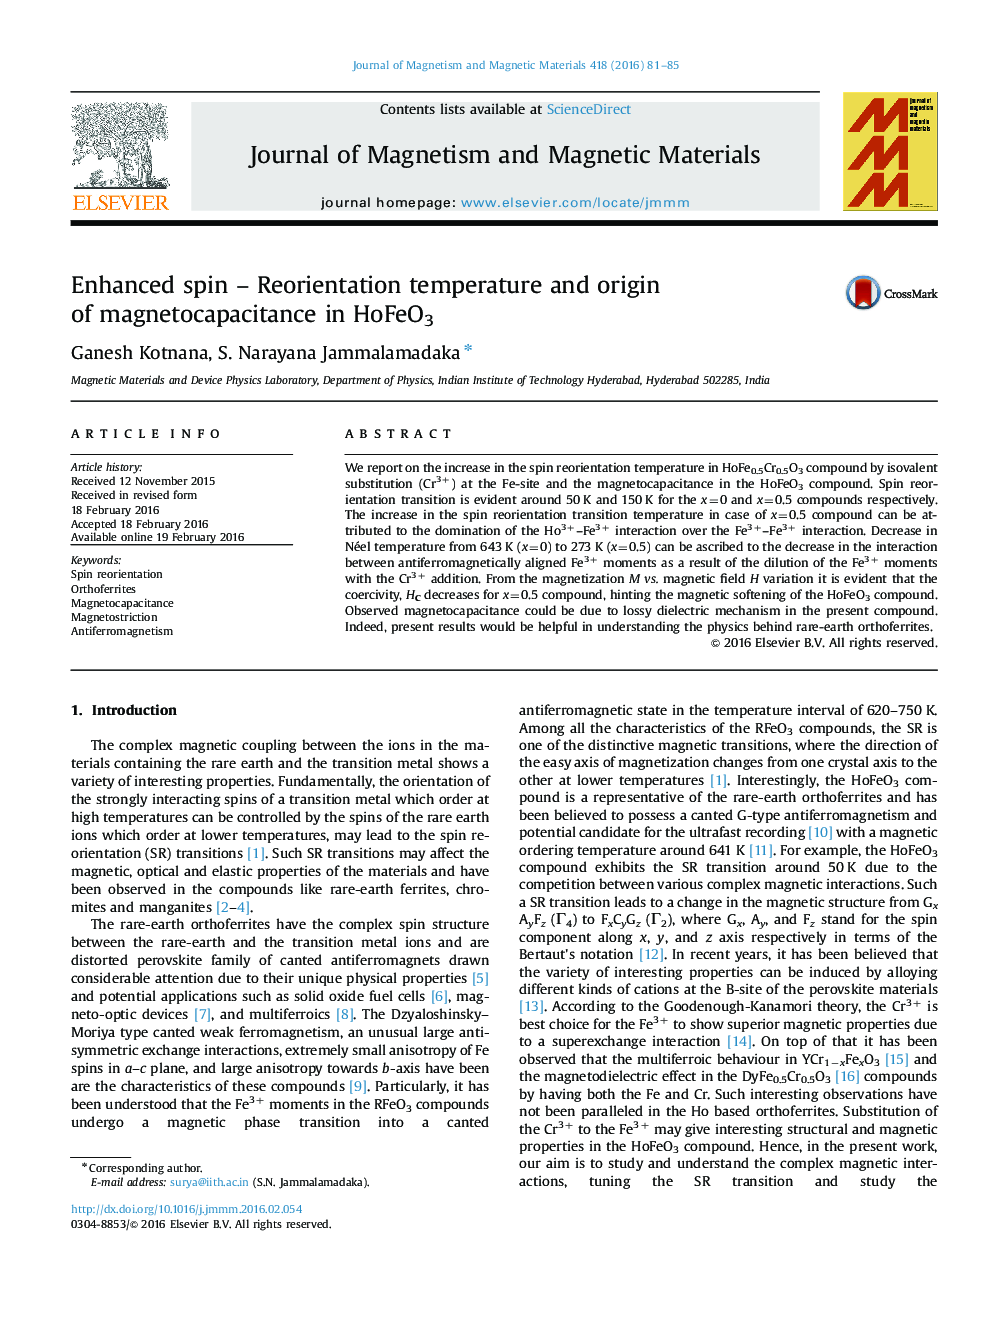 Enhanced spin – Reorientation temperature and origin of magnetocapacitance in HoFeO3